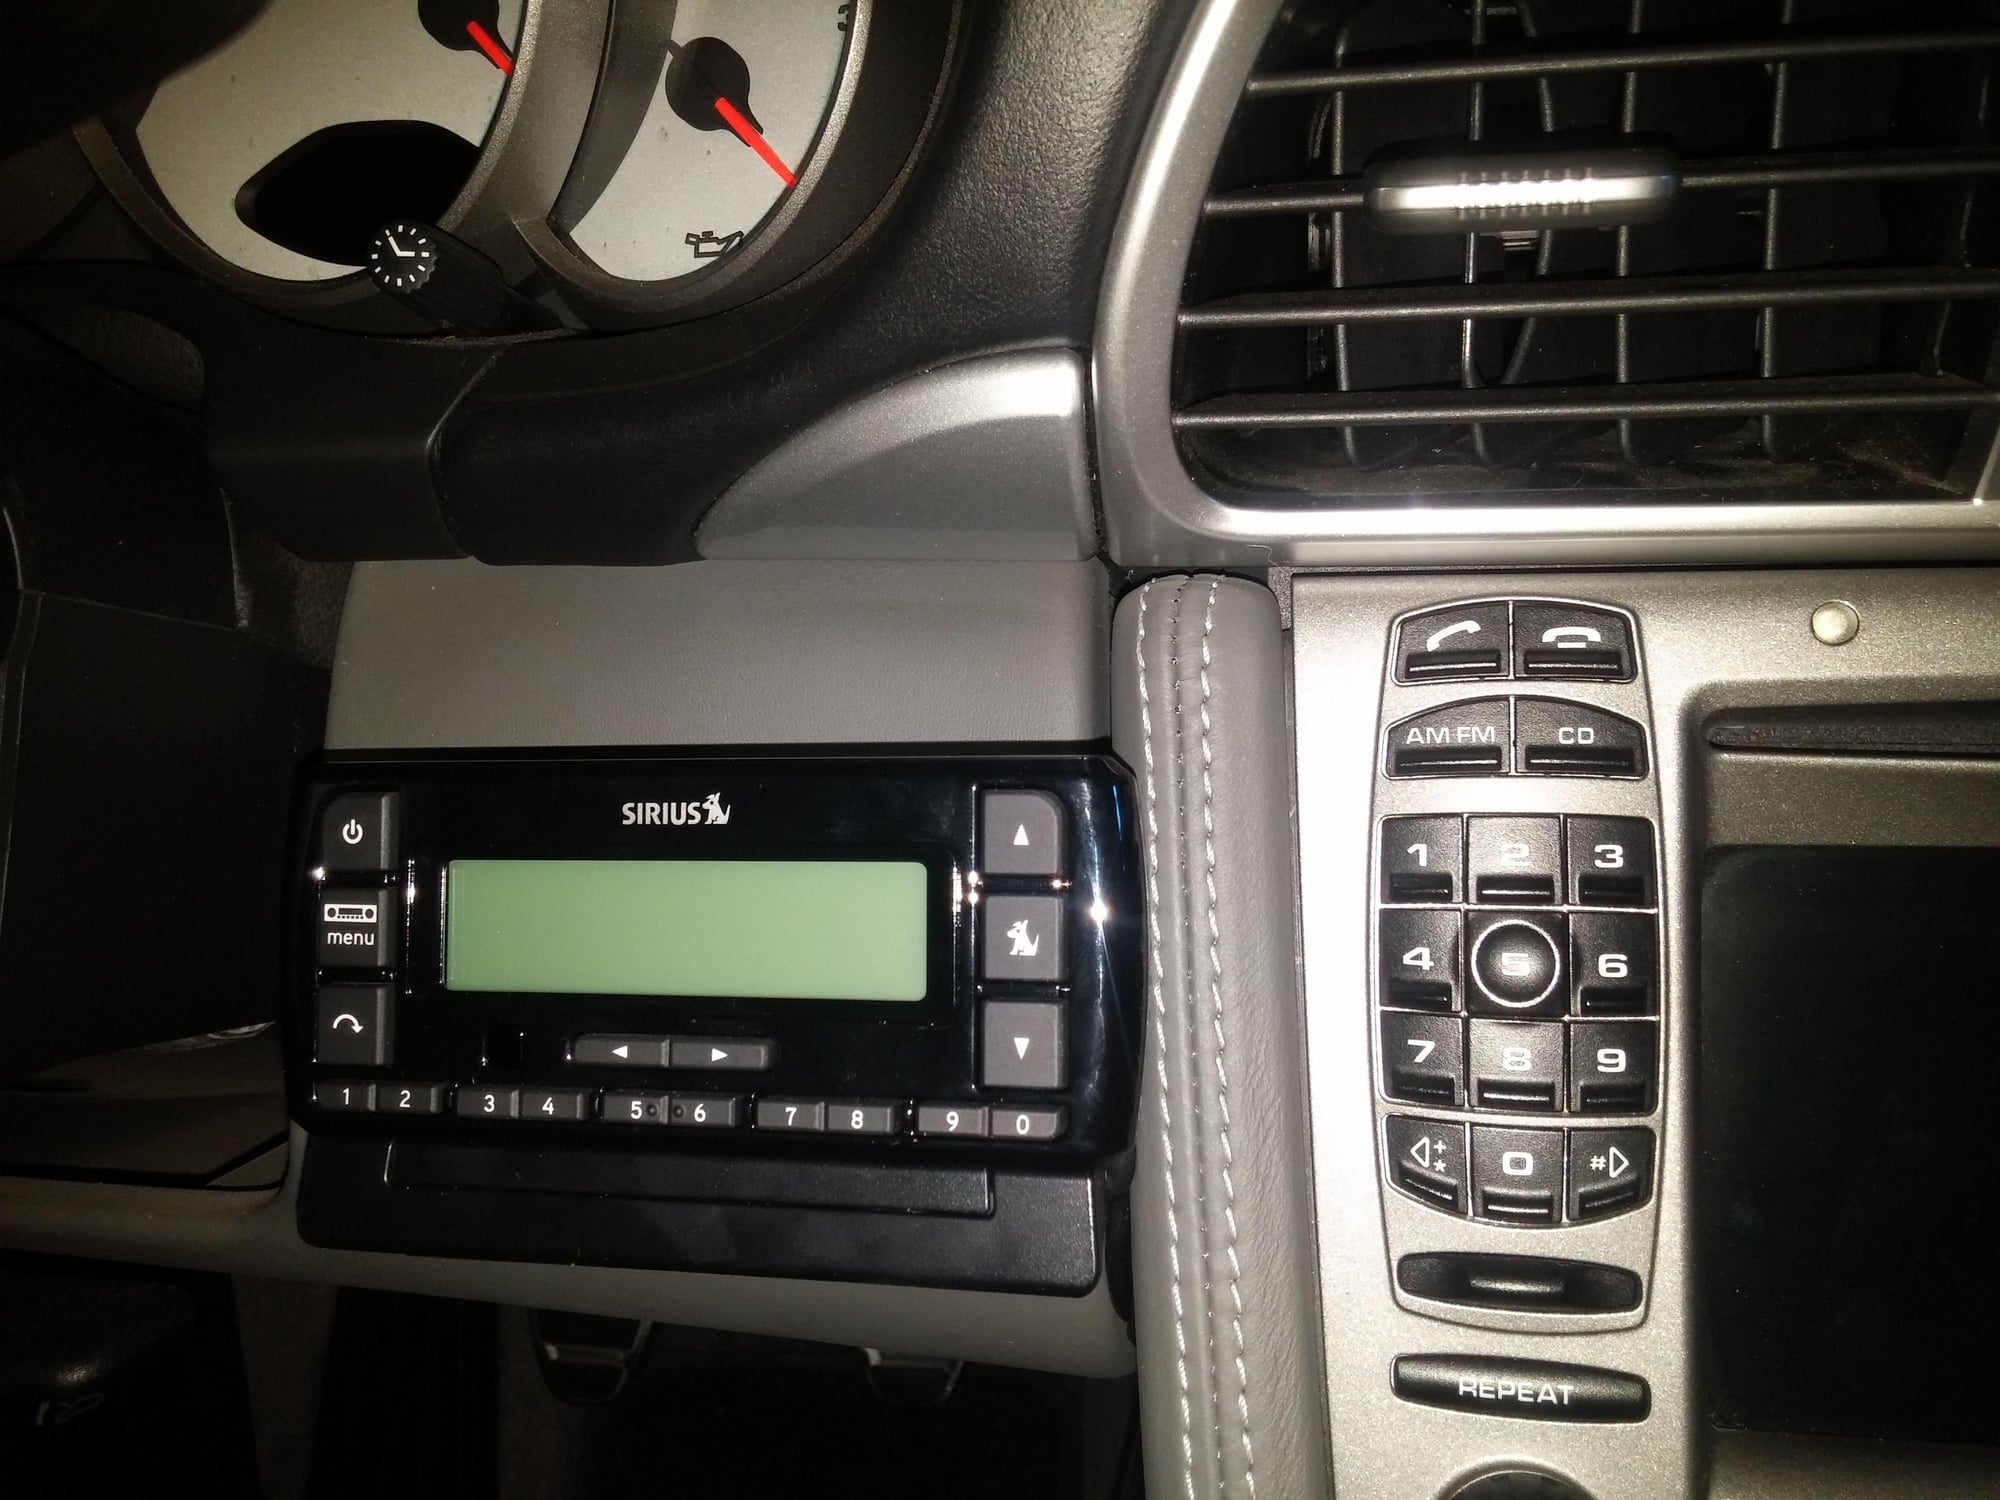  Metra Electronics 40EU30 2002-Up VW/BMW/European Vehicle Antenna  Adapter Cable Kit-Add CD with FM Modulator